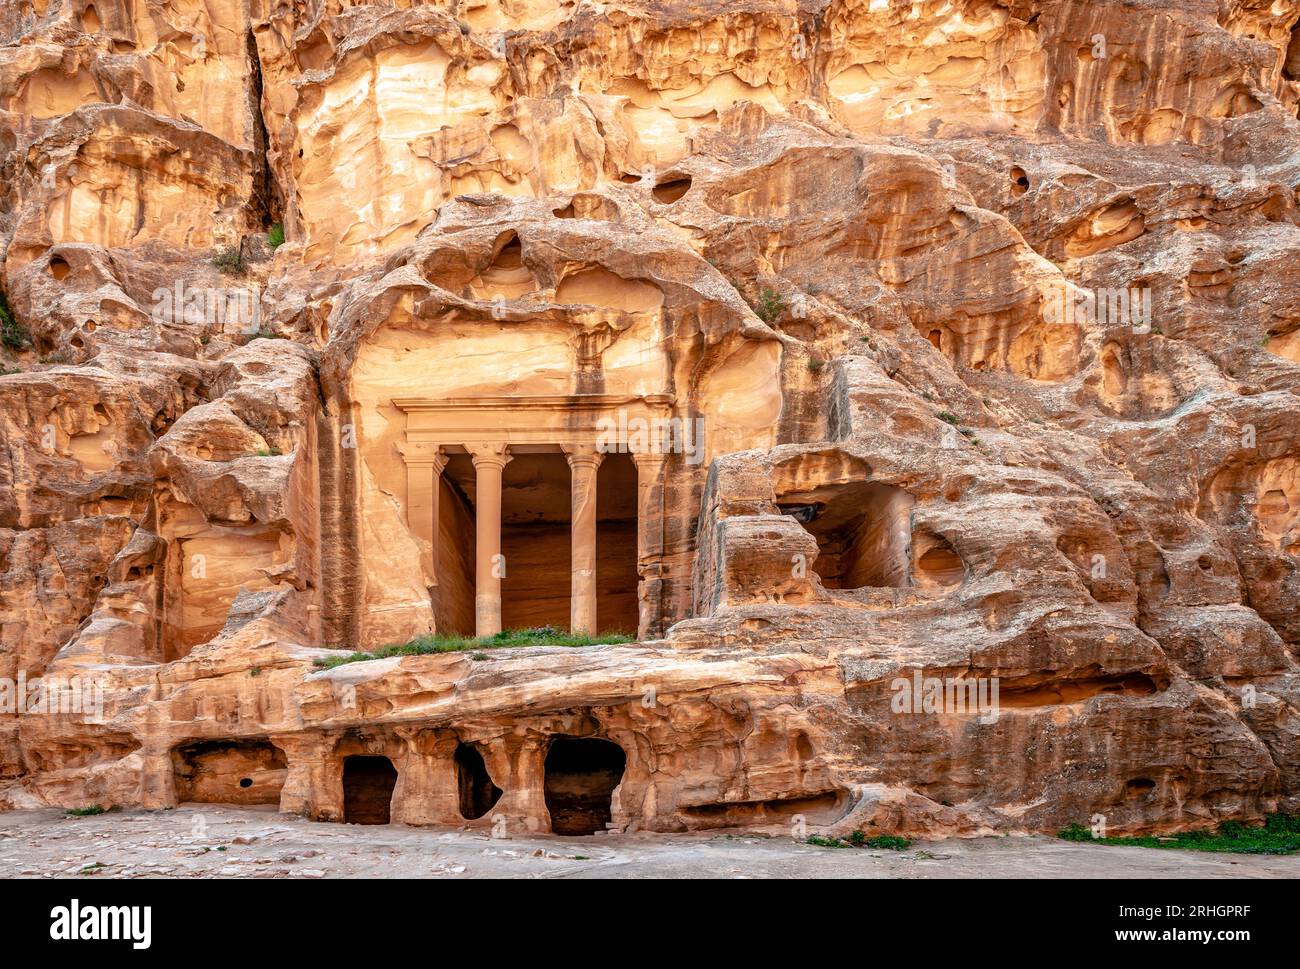 Temple above cave rooms, carved into sandstone in Siq Al-Barid, Little Petra, Jordan. Stock Photo